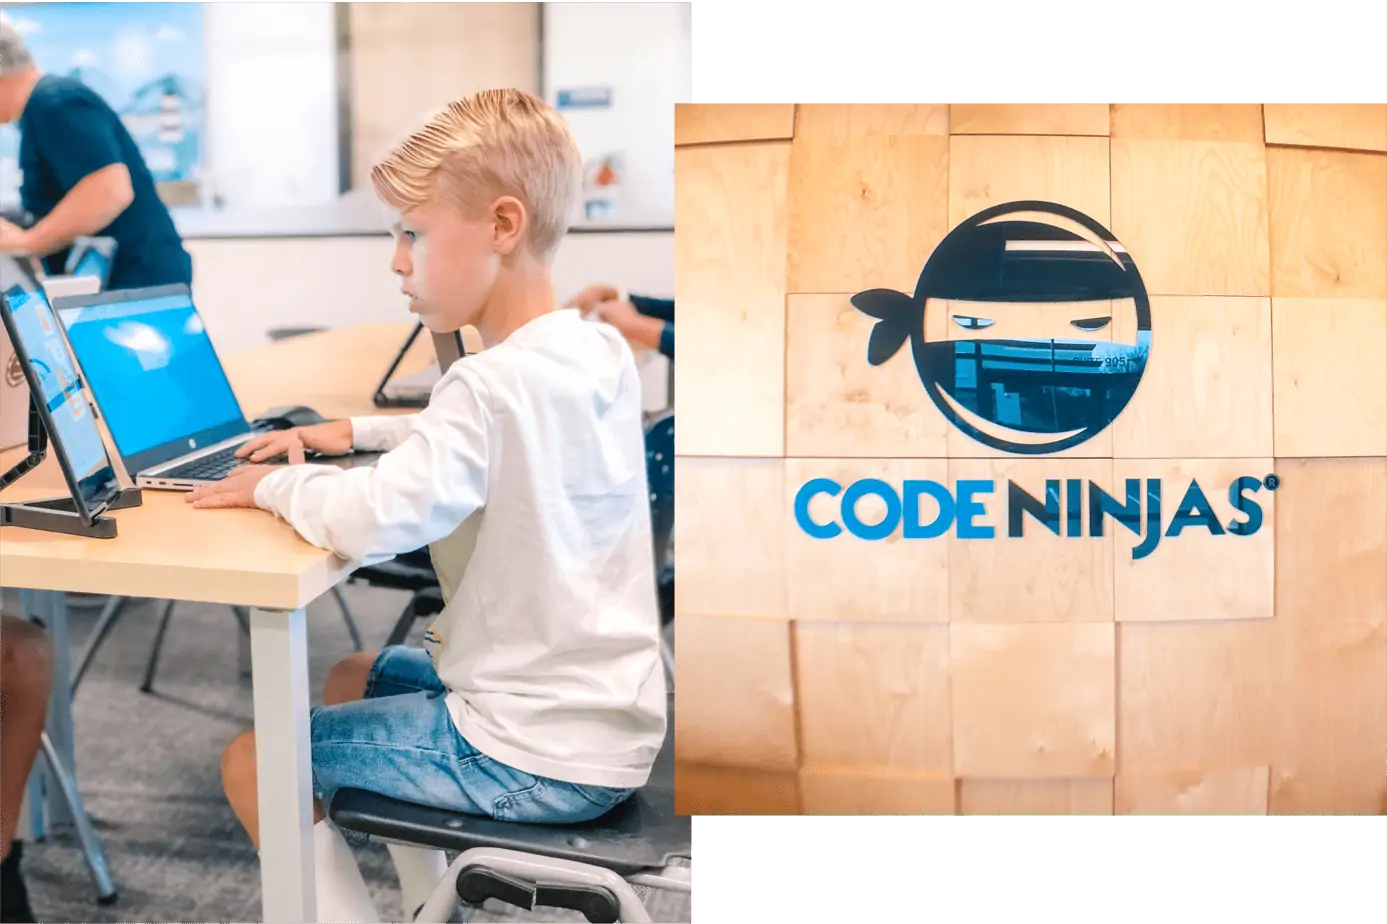 code ninjas gift idea